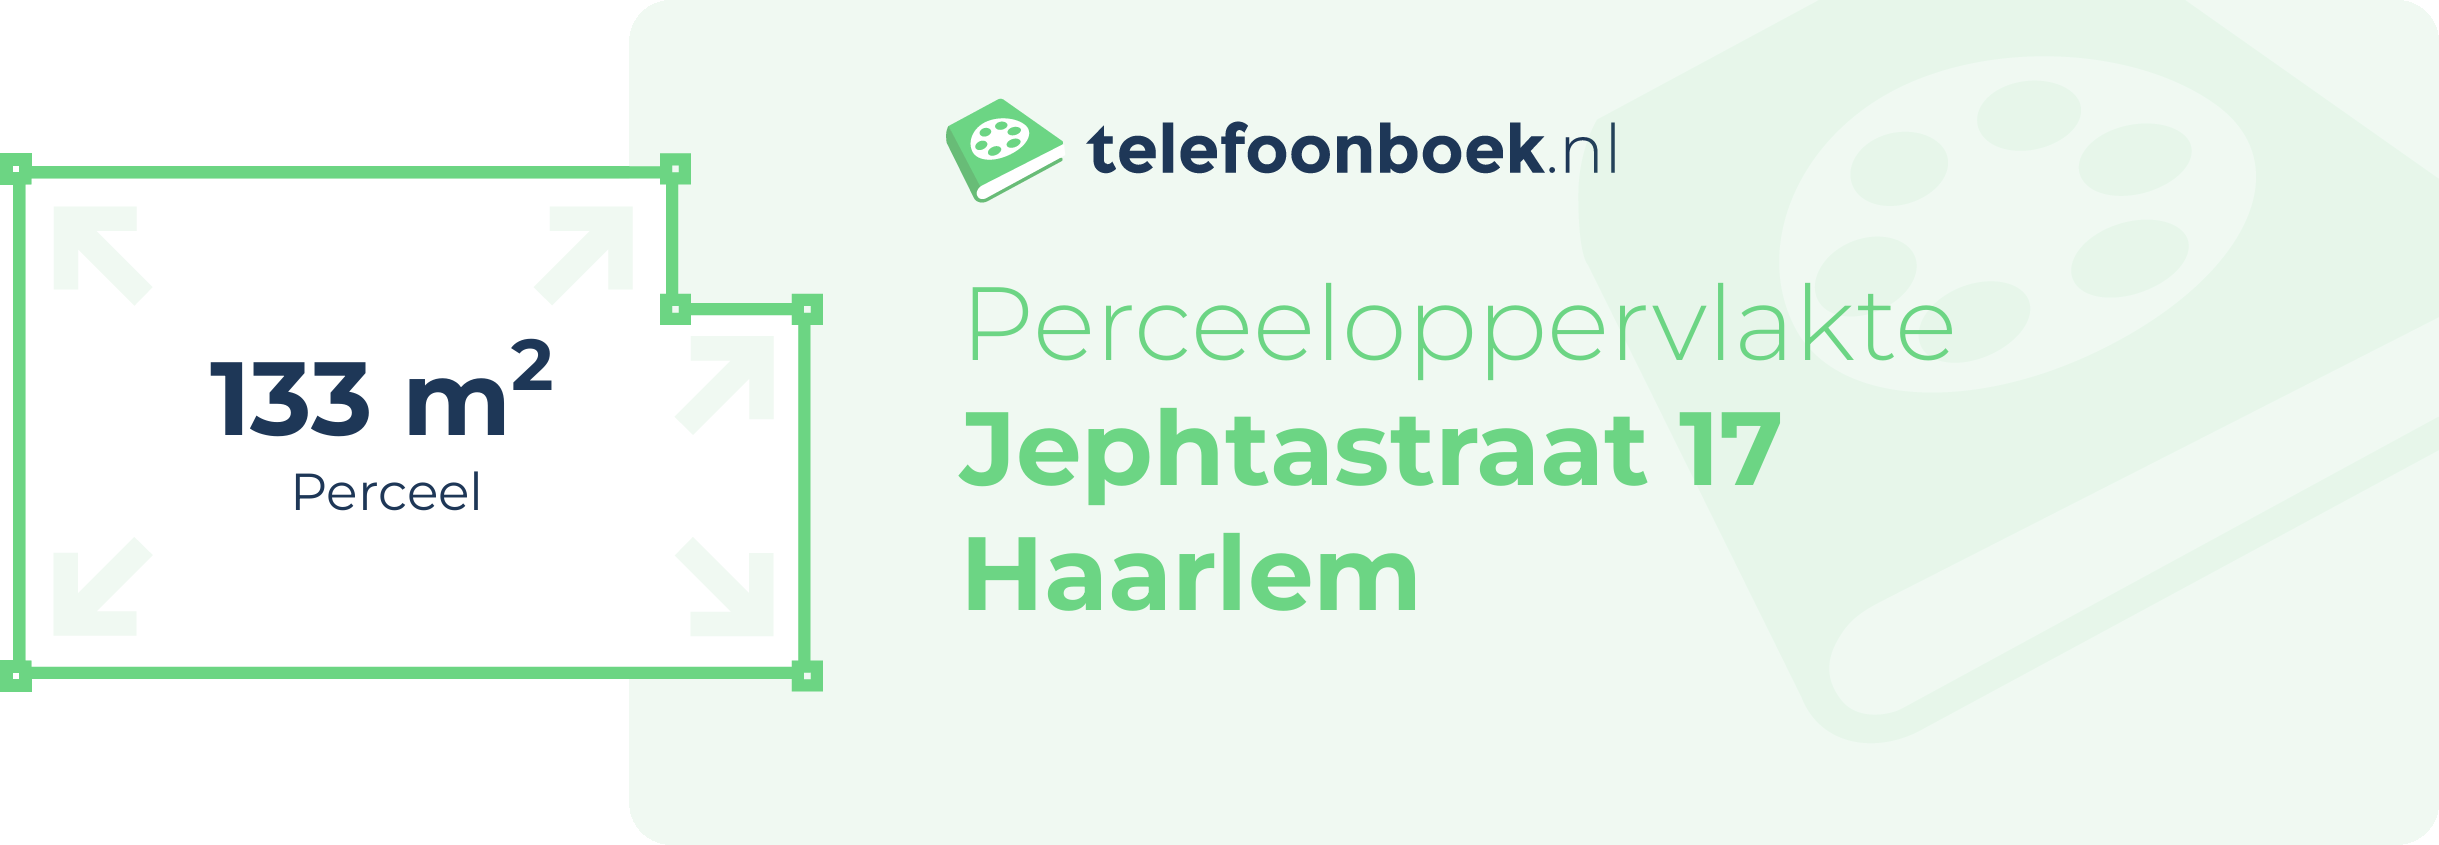 Perceeloppervlakte Jephtastraat 17 Haarlem